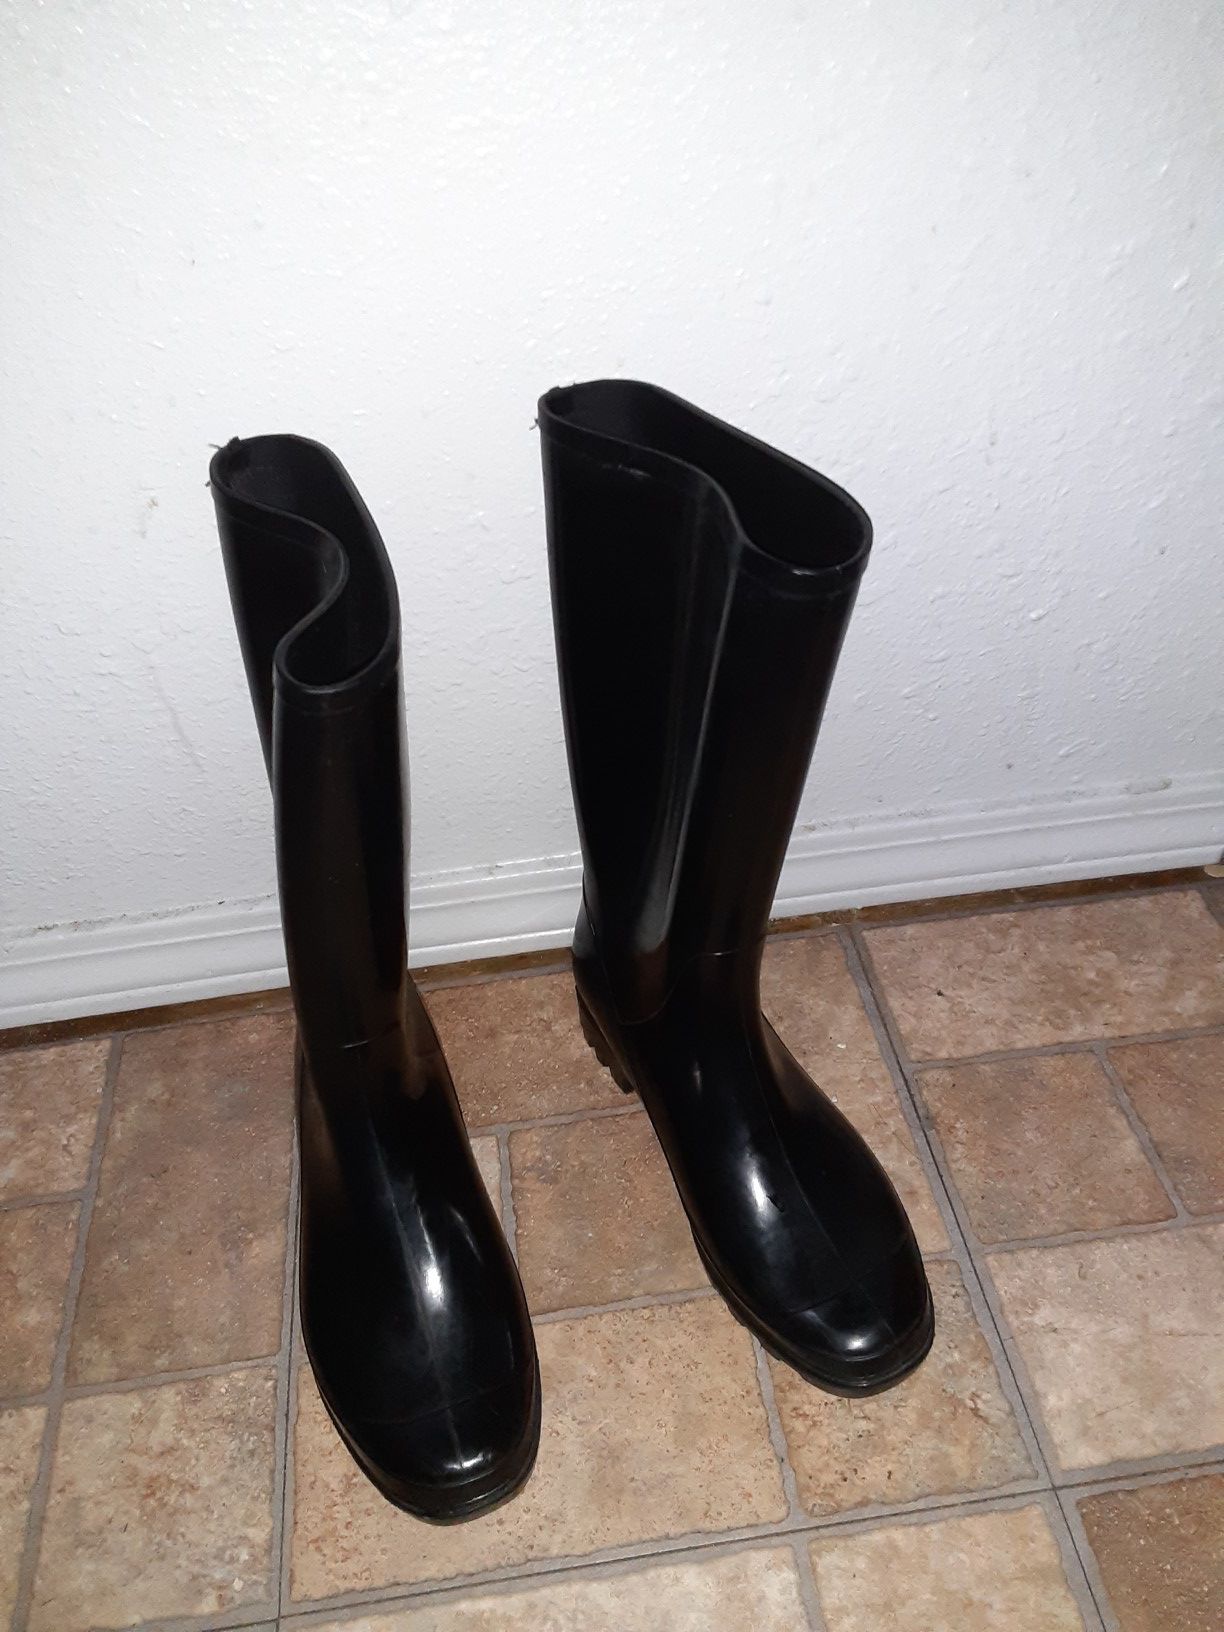 Rain boots for women size 8